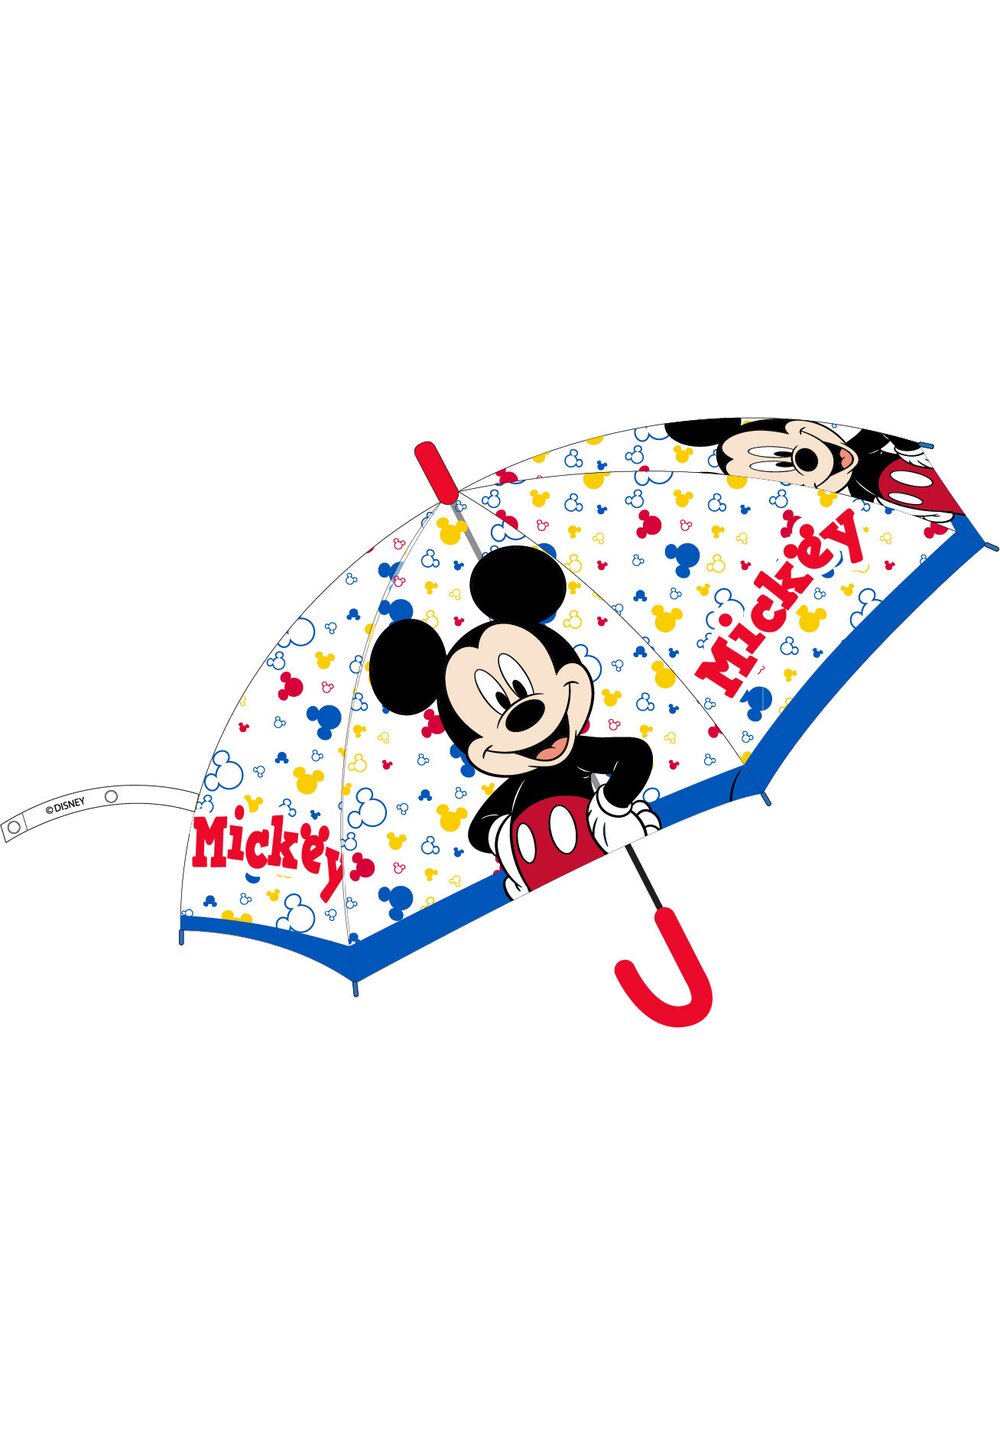 Umbrela automata, Mickey Mouse, multicolor, 60cm